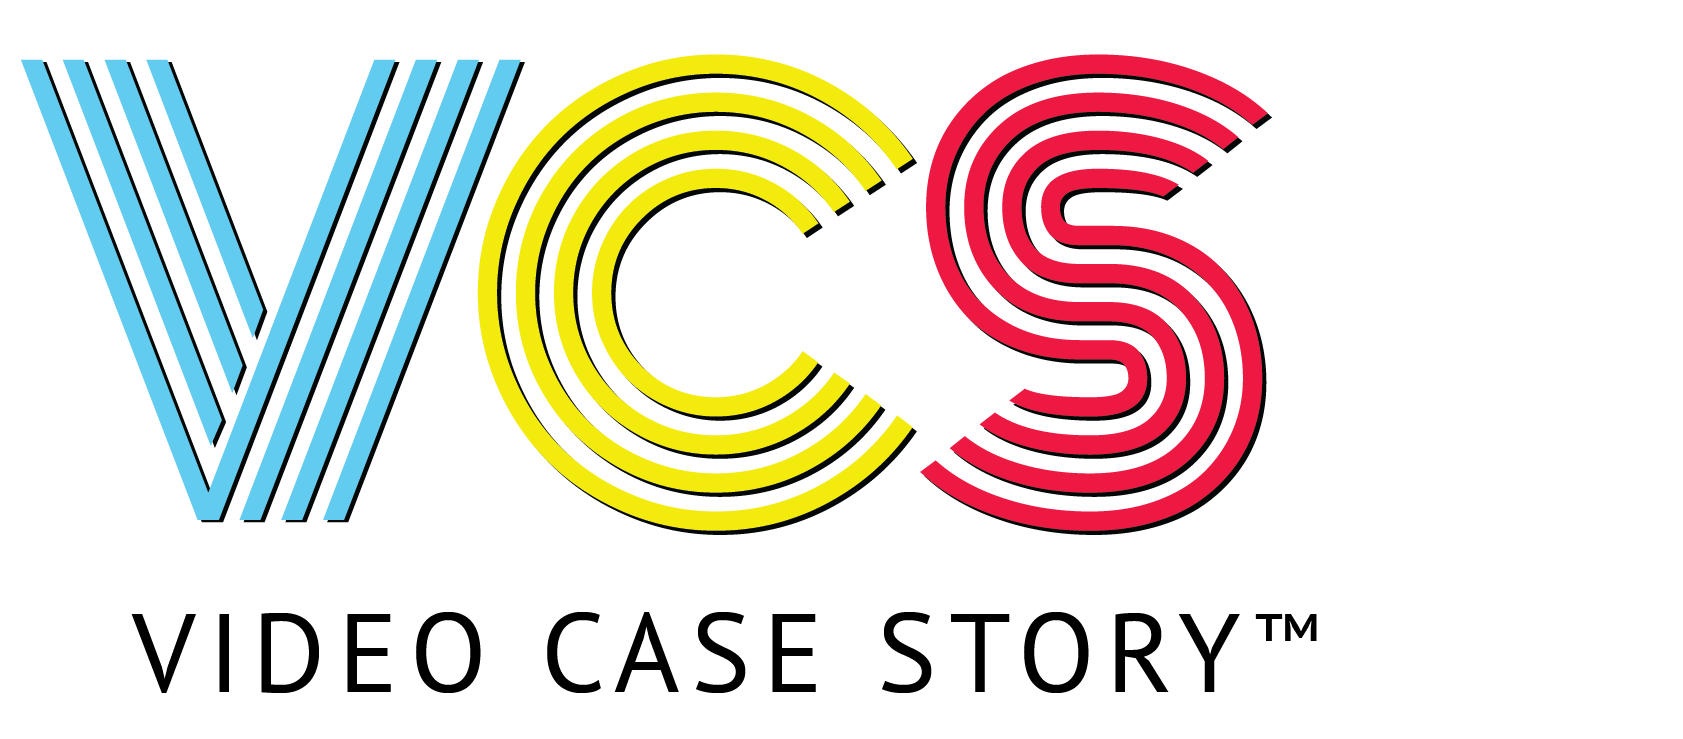 videoCaseStory_Logo-03